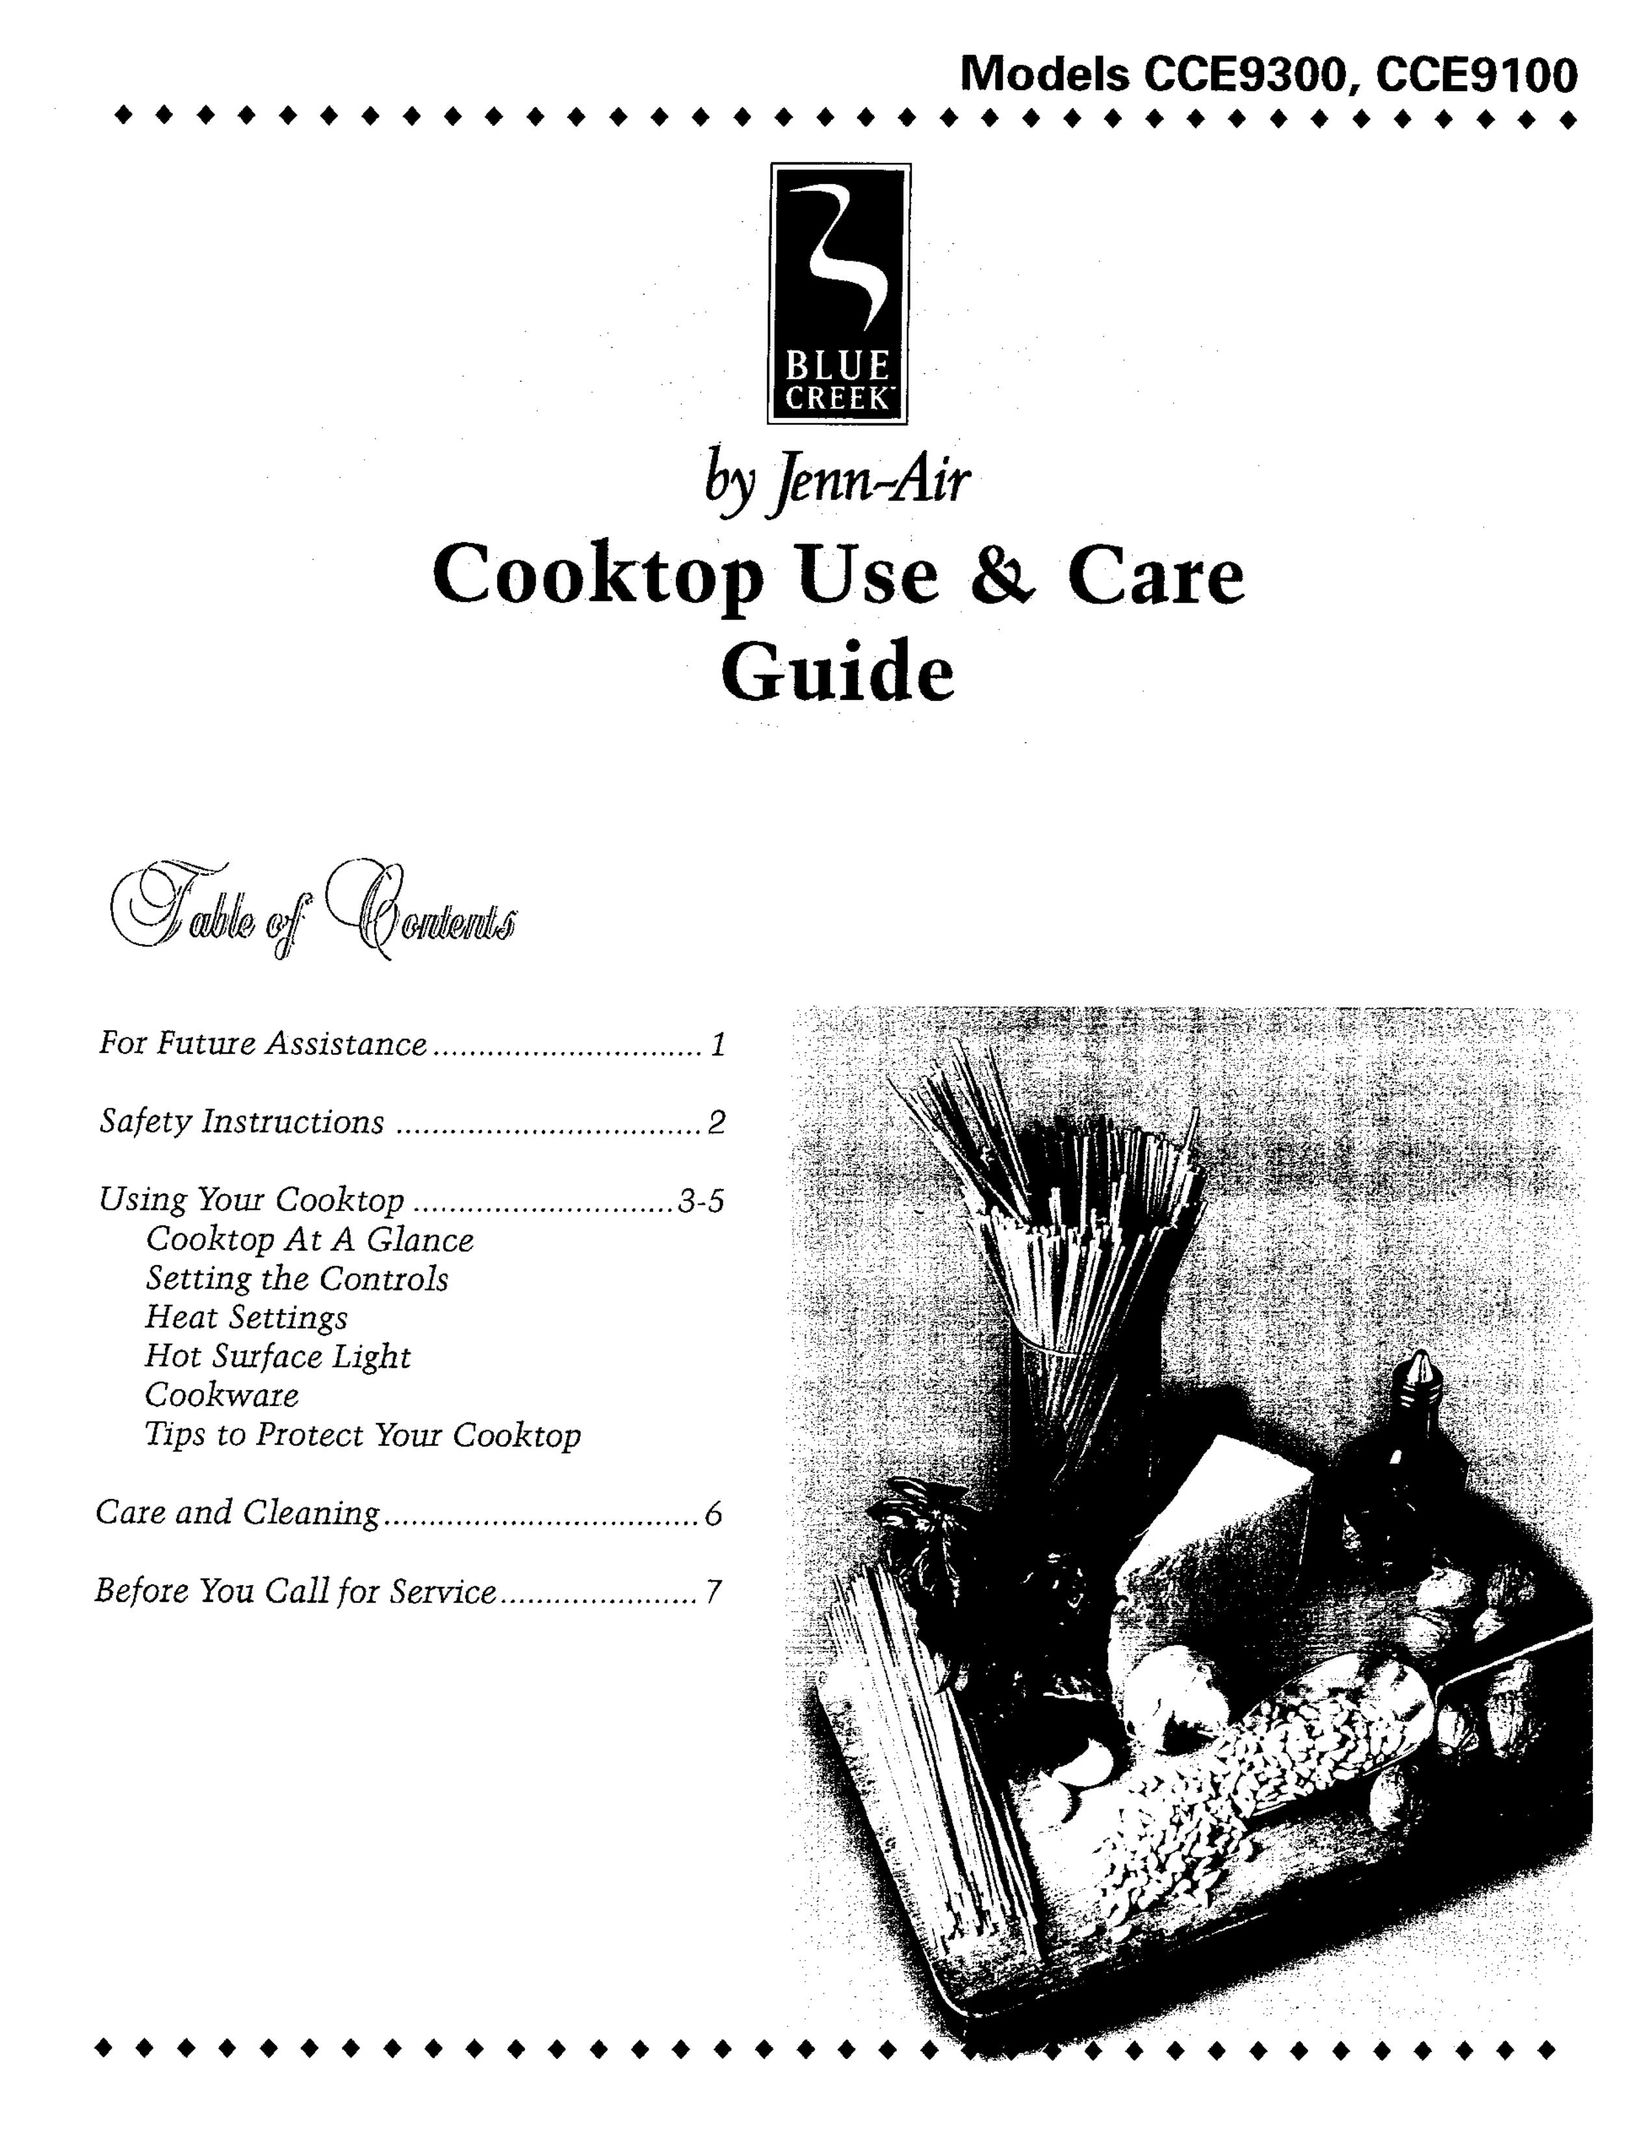 Jenn-Air CCE9300 Cooktop User Manual